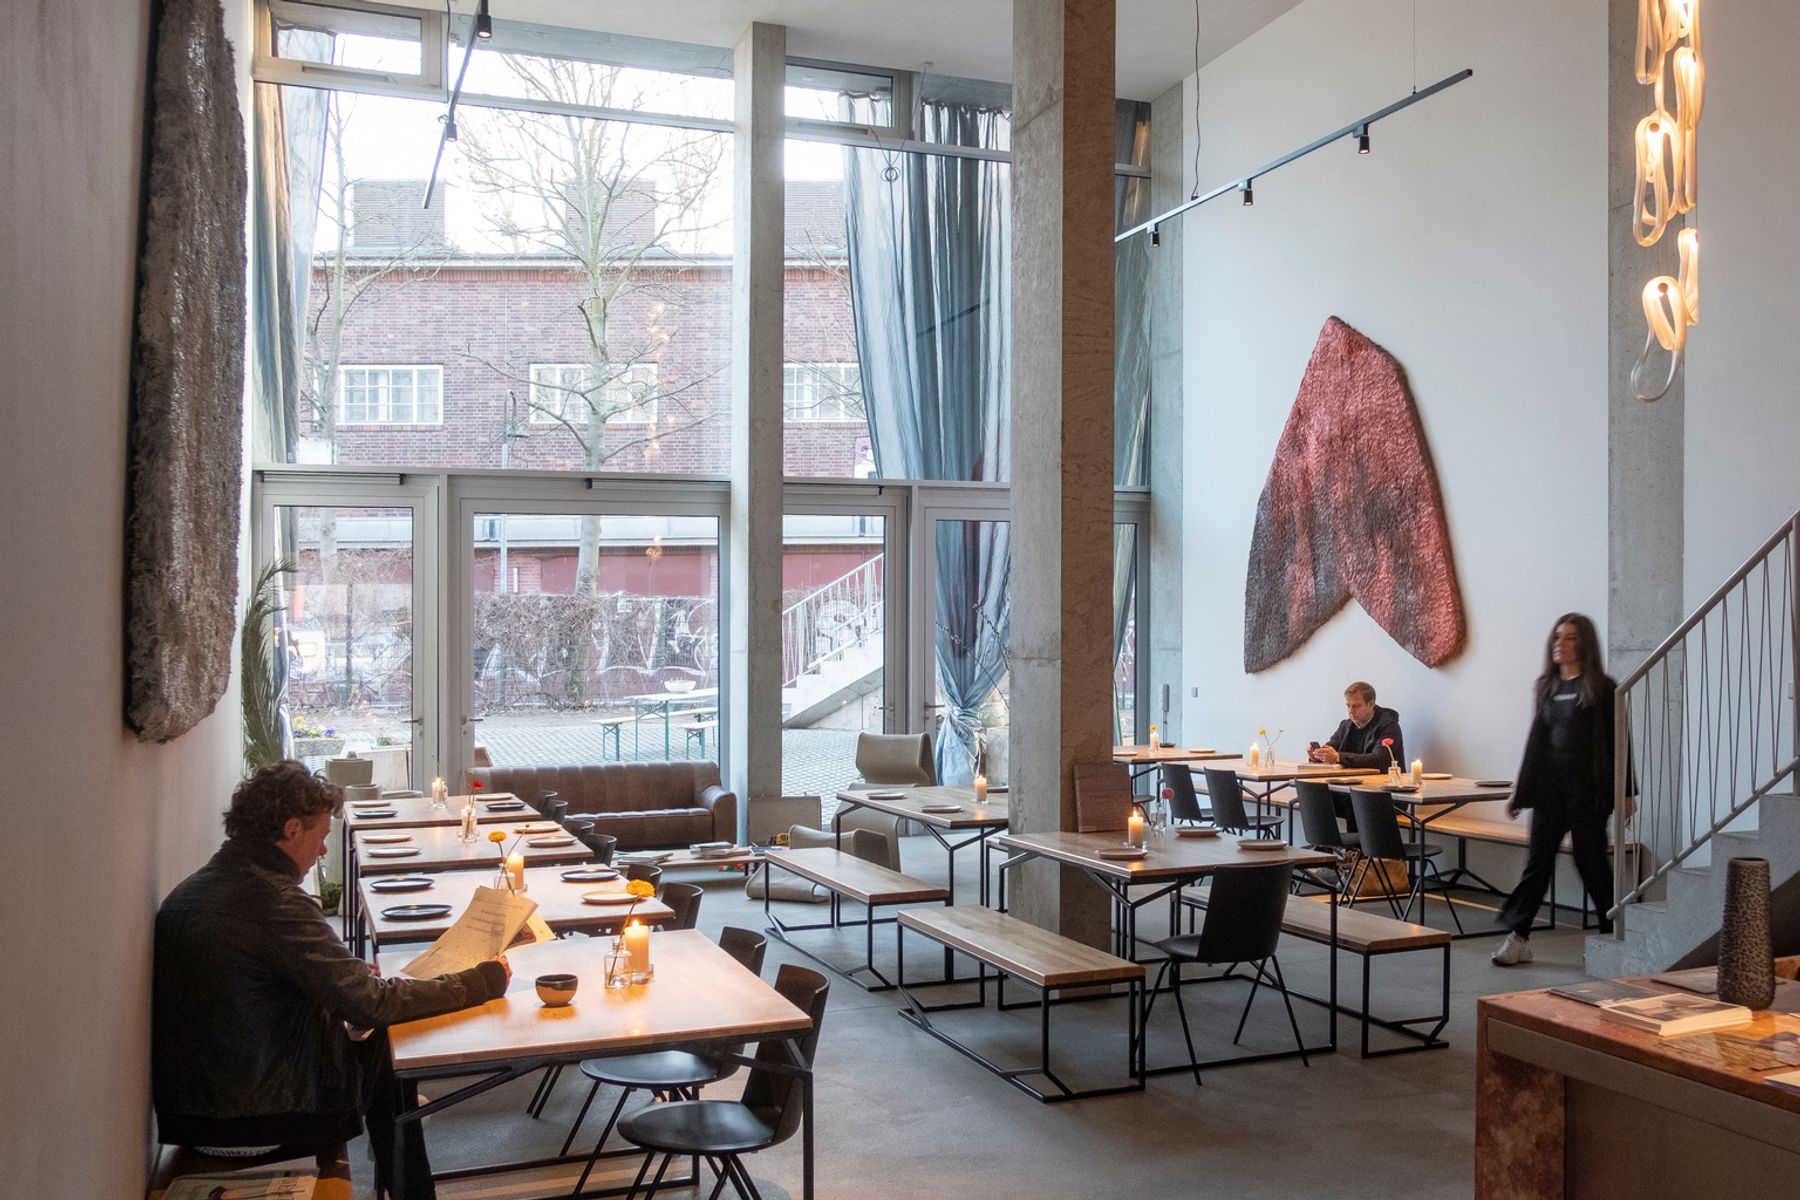 Baldon Cafe & Bar, Berlin. Architektur: Brandlhuber, Berlin. Lichtplanung: Patrick McCumiskey. Fotografie: Sebastian Mayer, Berlin.